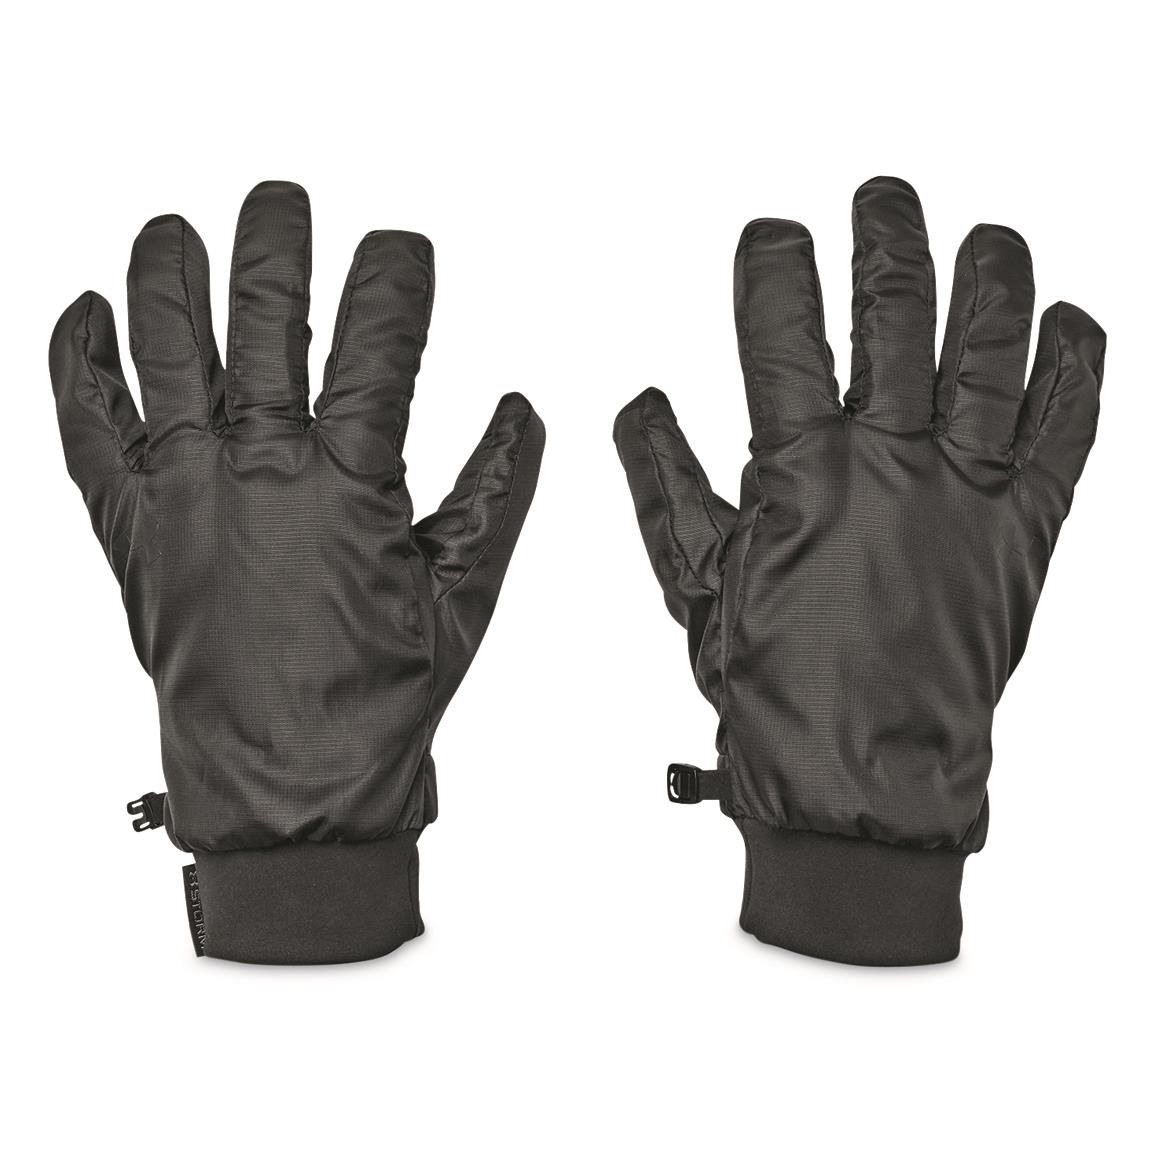 Under Armour Men's Storm Insulated Gloves, Black/Black